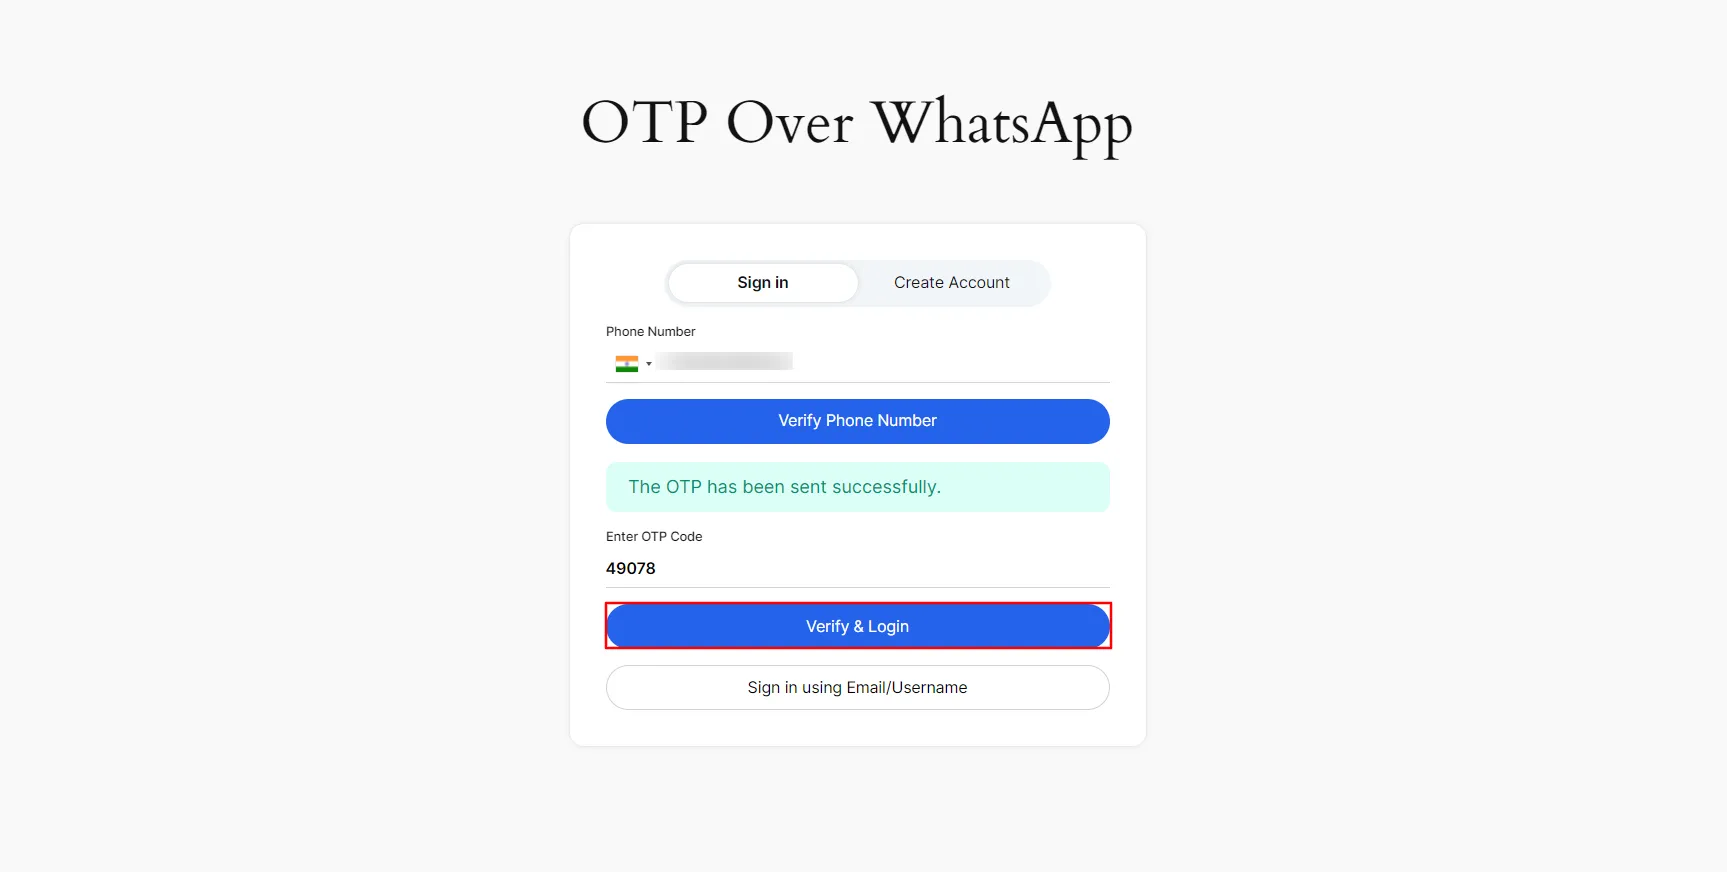 WhatsApp Login with OTP - Enter valid code